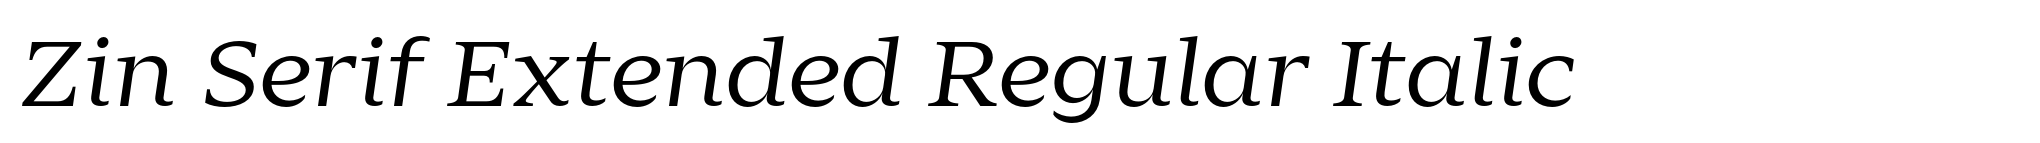 Zin Serif Extended Regular Italic image